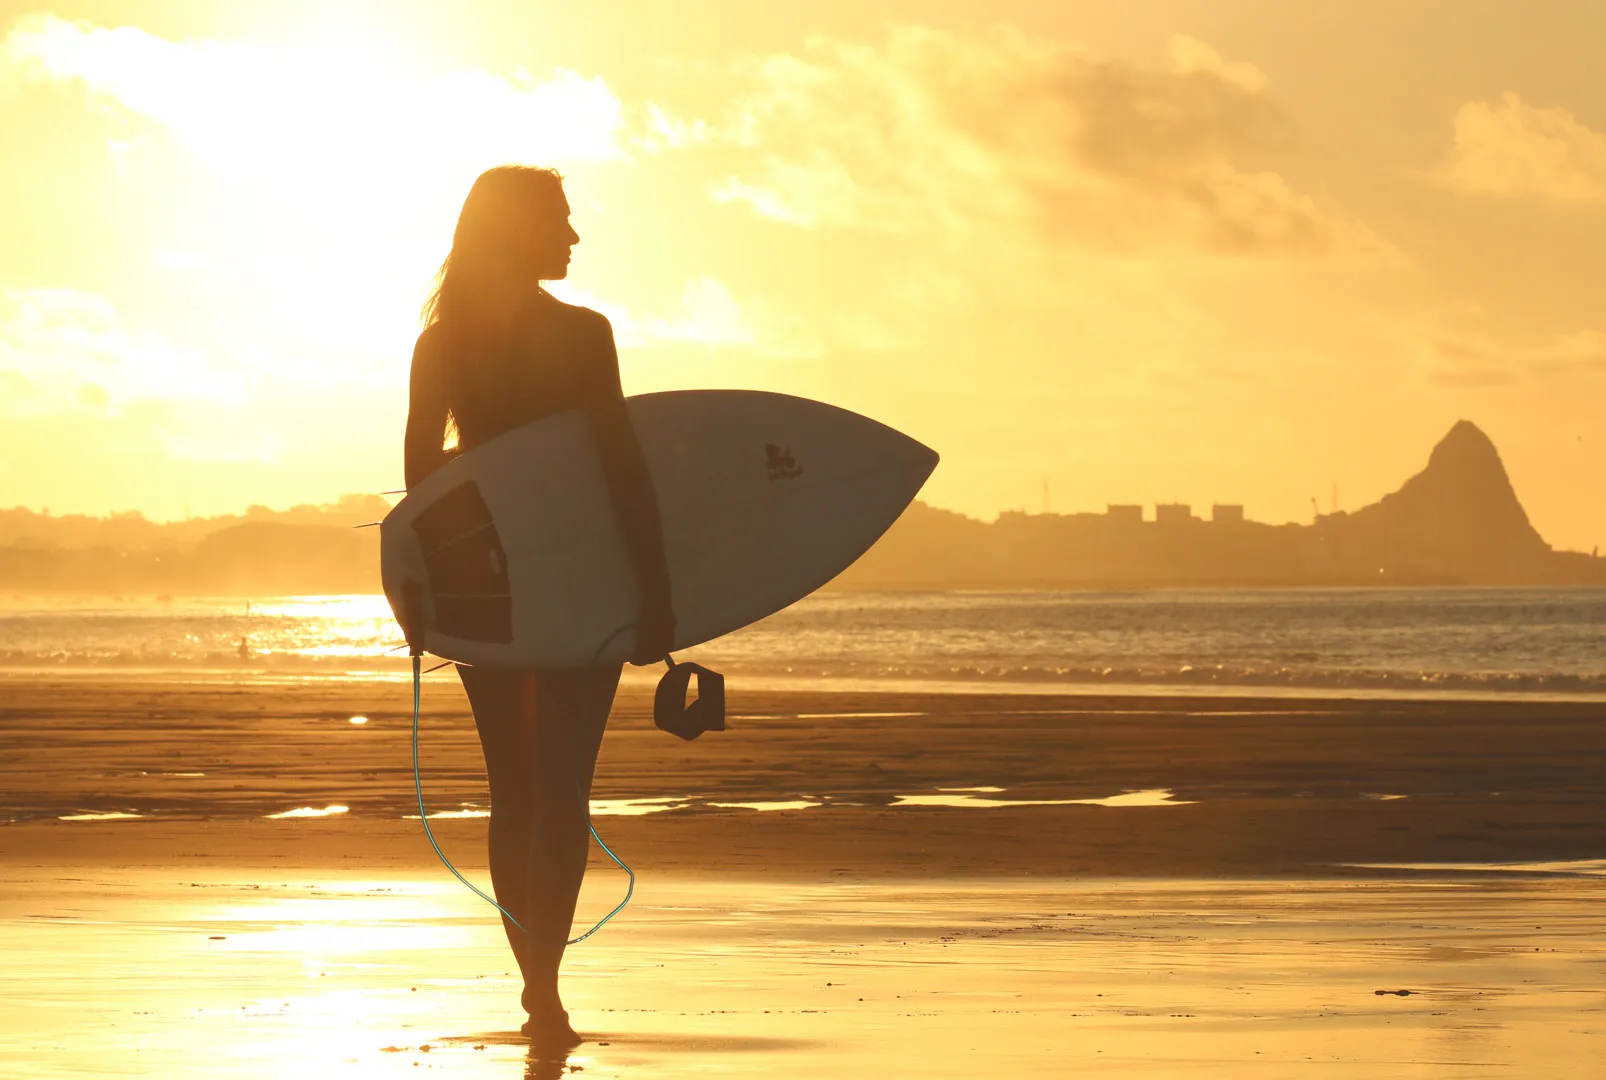 Nota sobre Algunos tips para surfistas principiantes